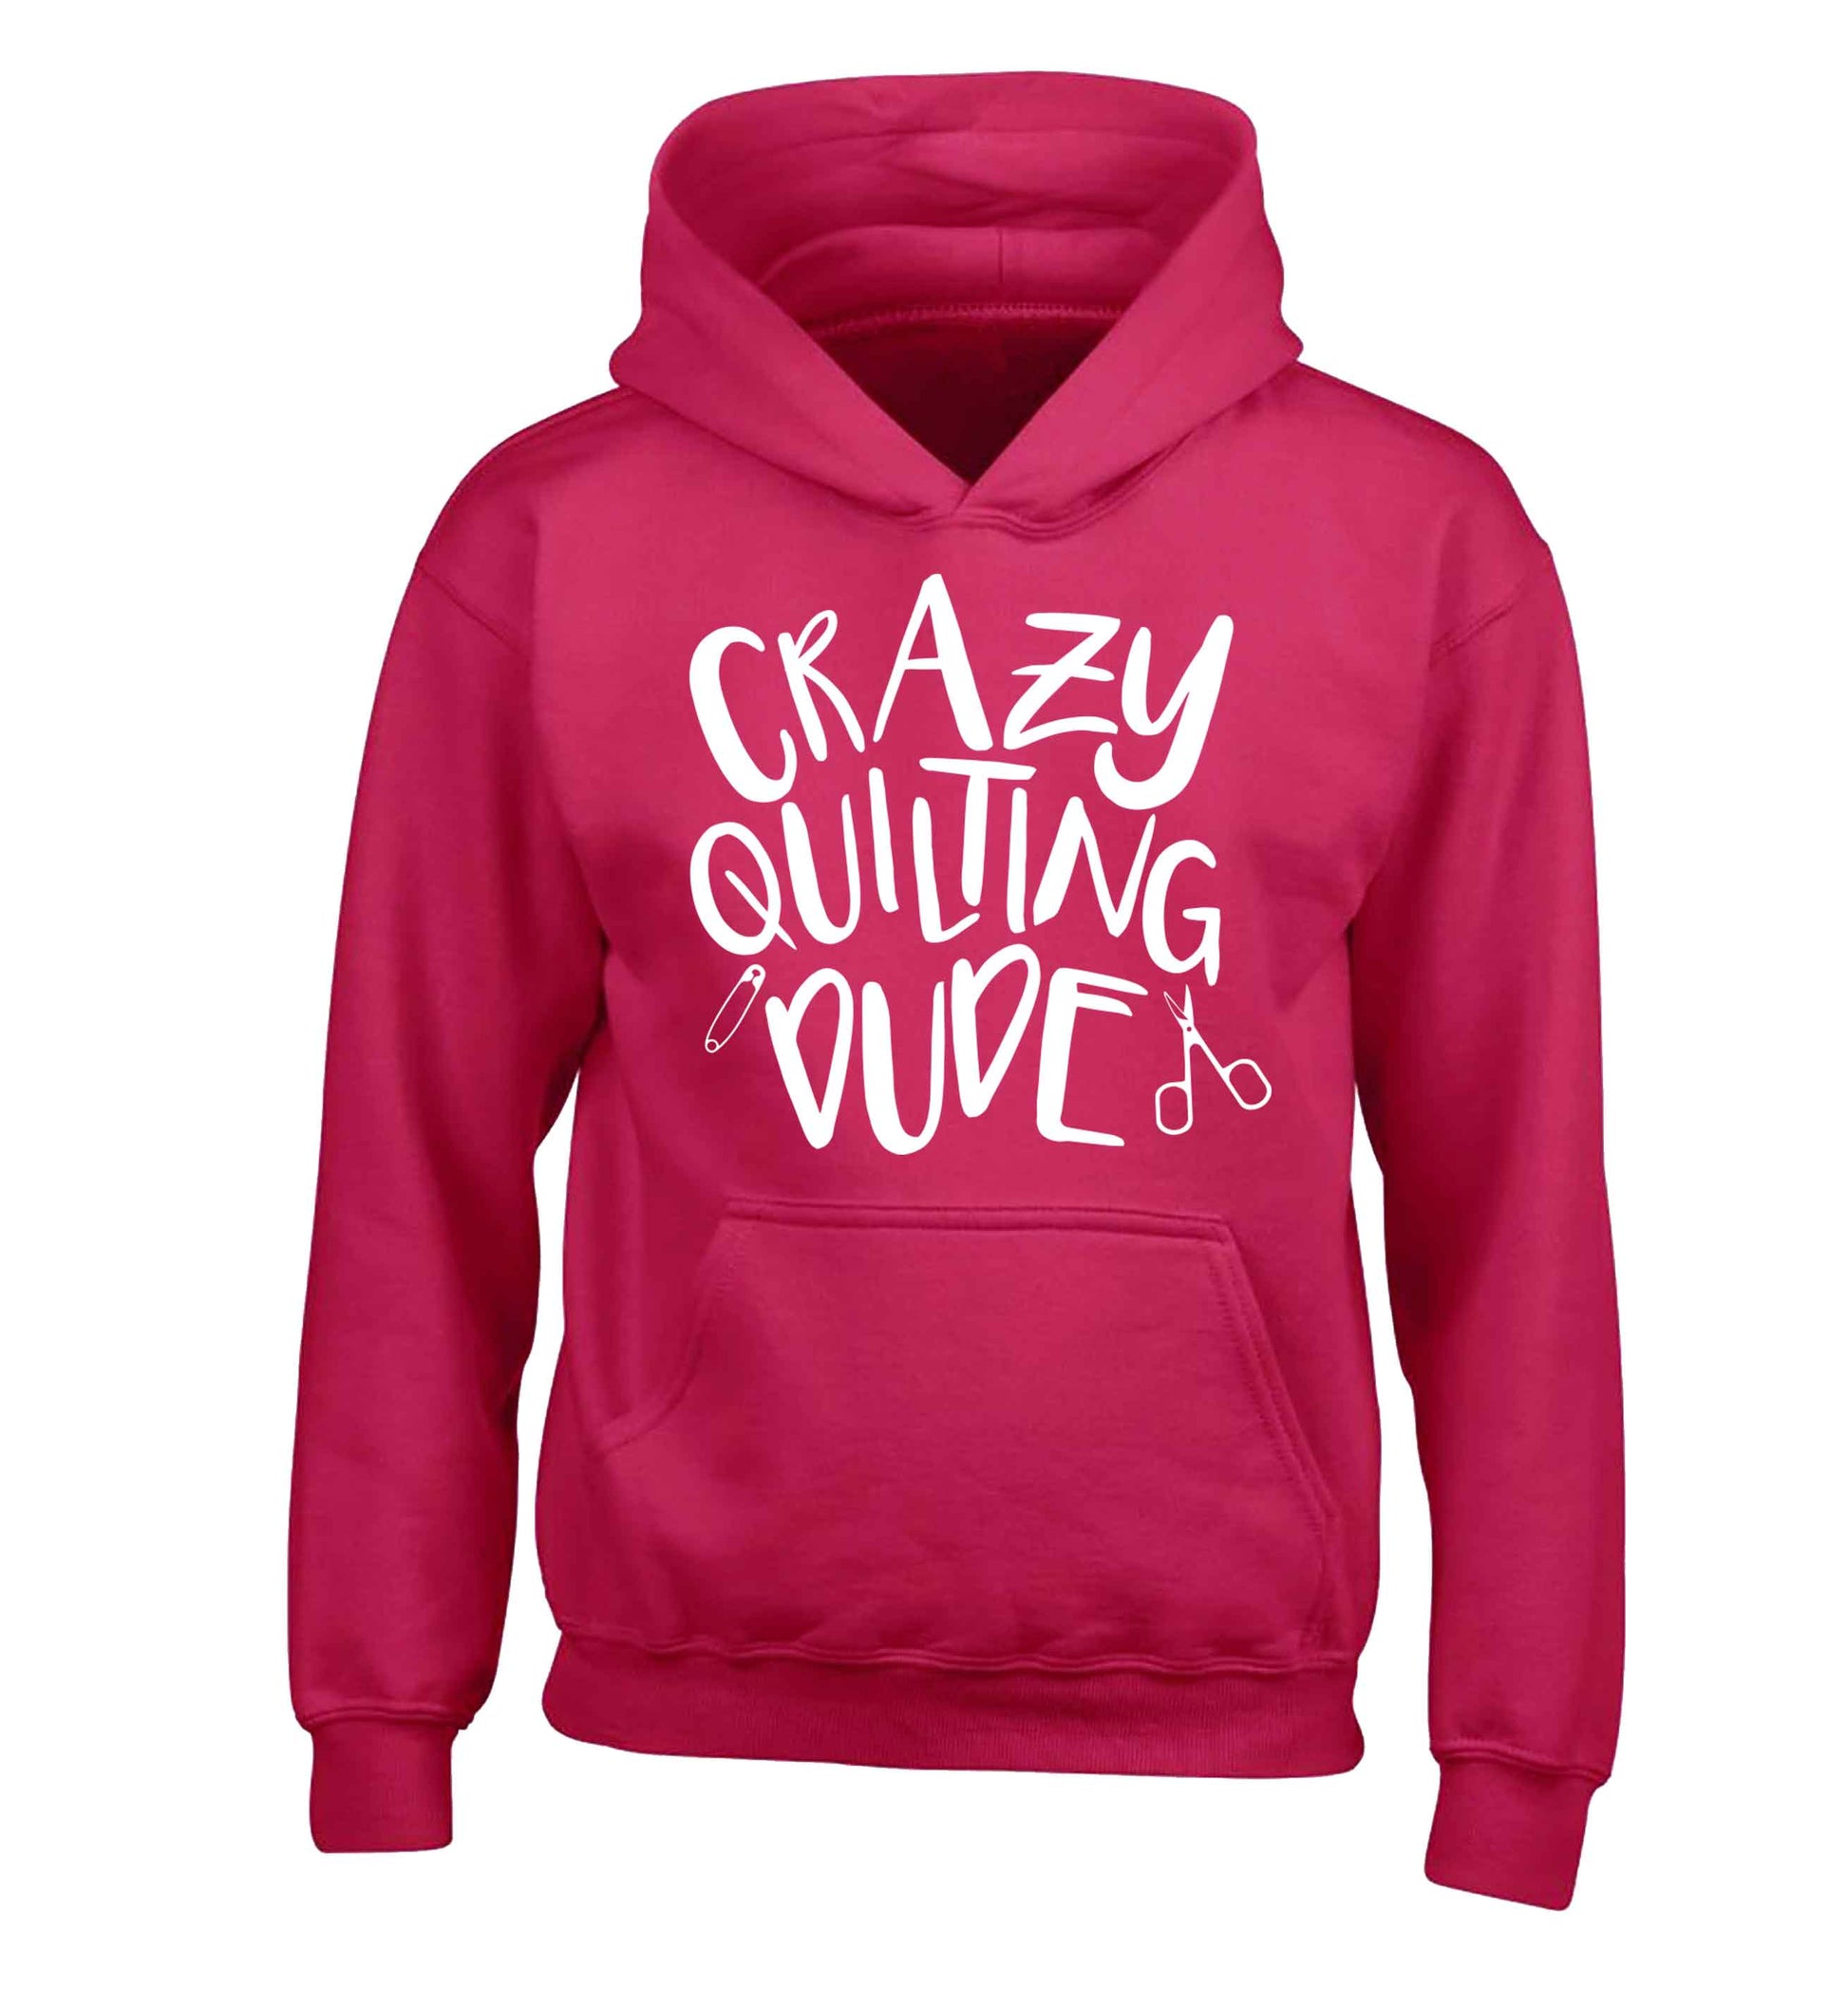 Crazy quilting dude children's pink hoodie 12-13 Years